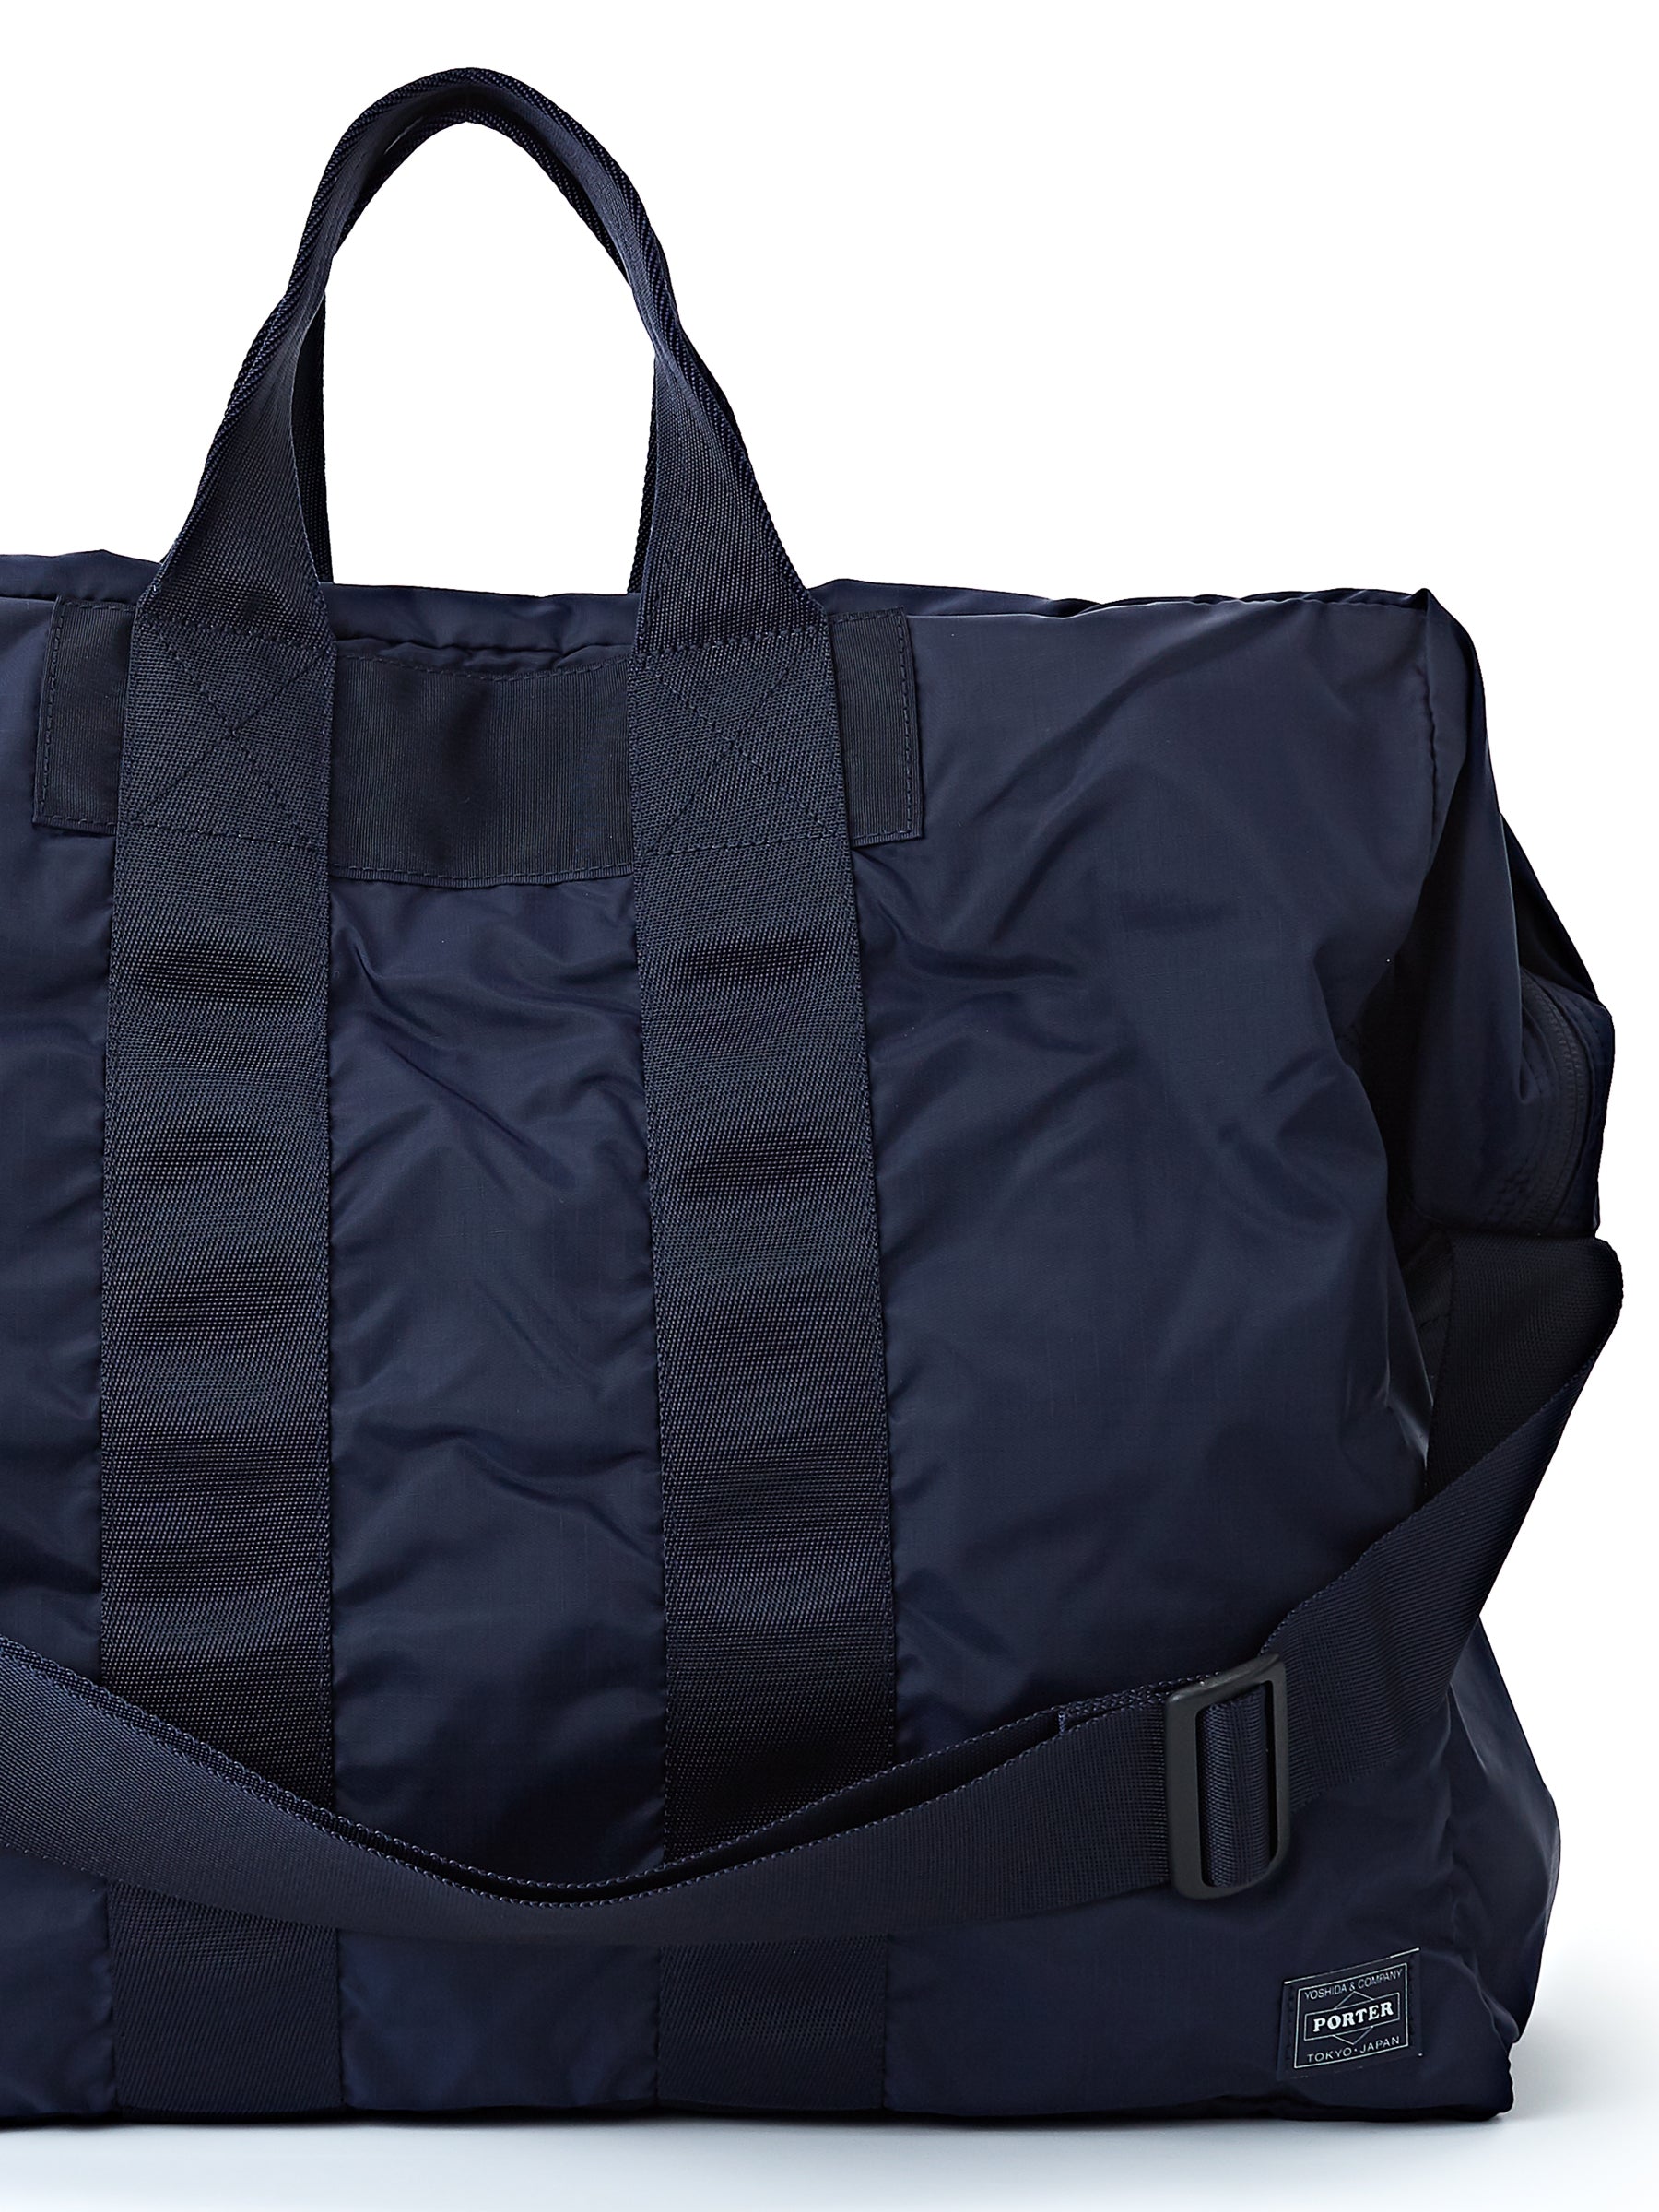 Porter-Yoshida & Co 2-way Flex Duffle Bag Navy